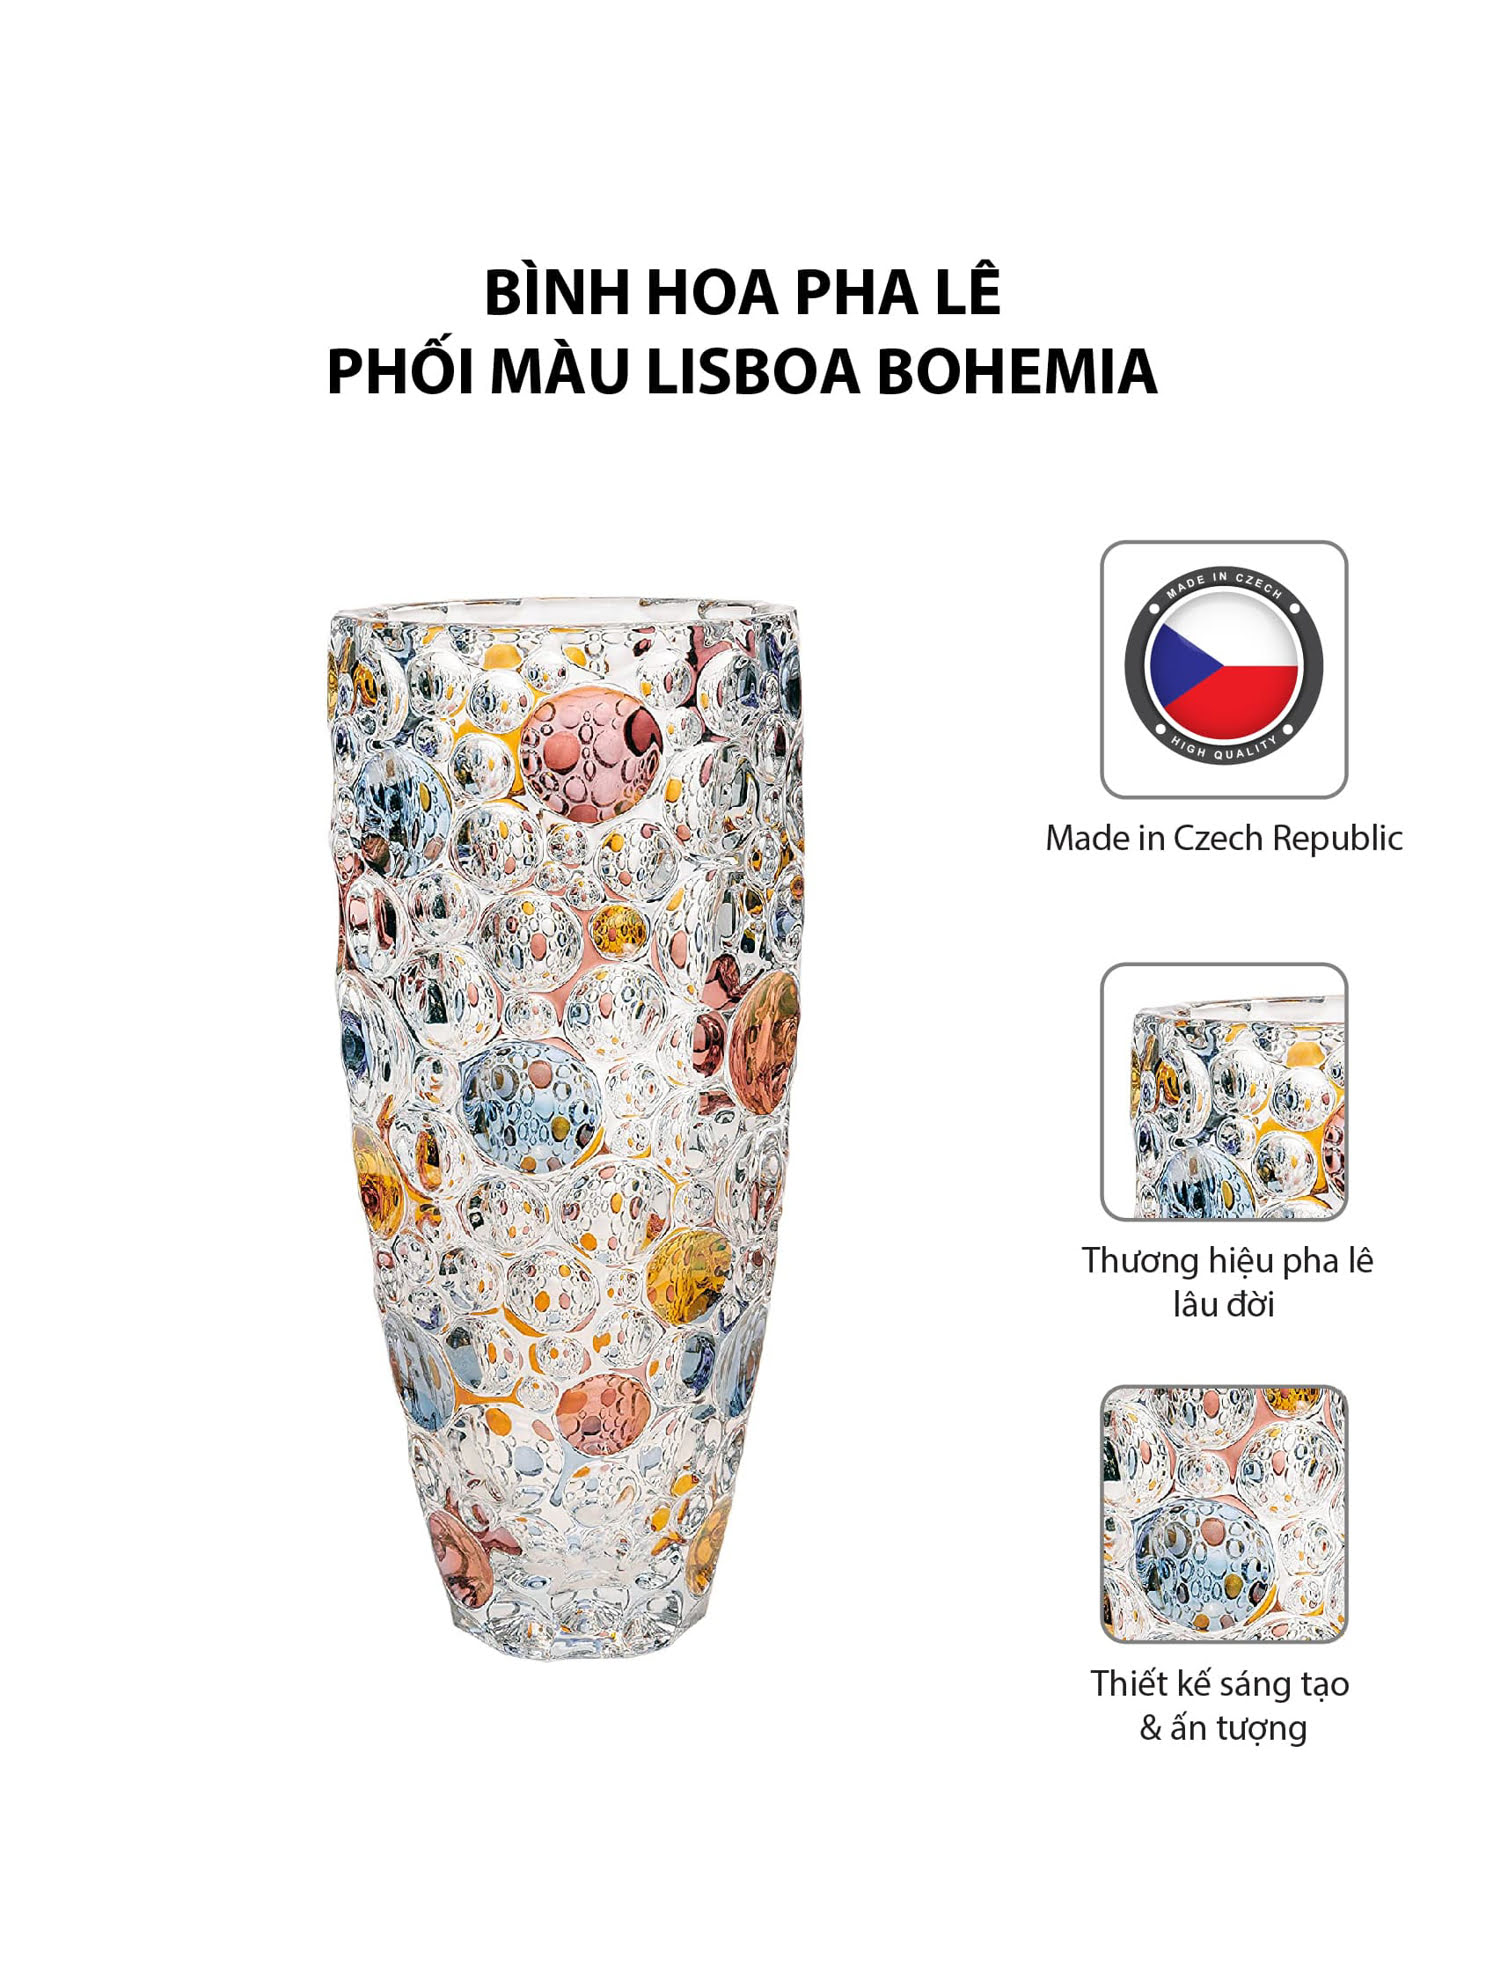 Bình hoa pha lê phối màu Lisboa Bohemia